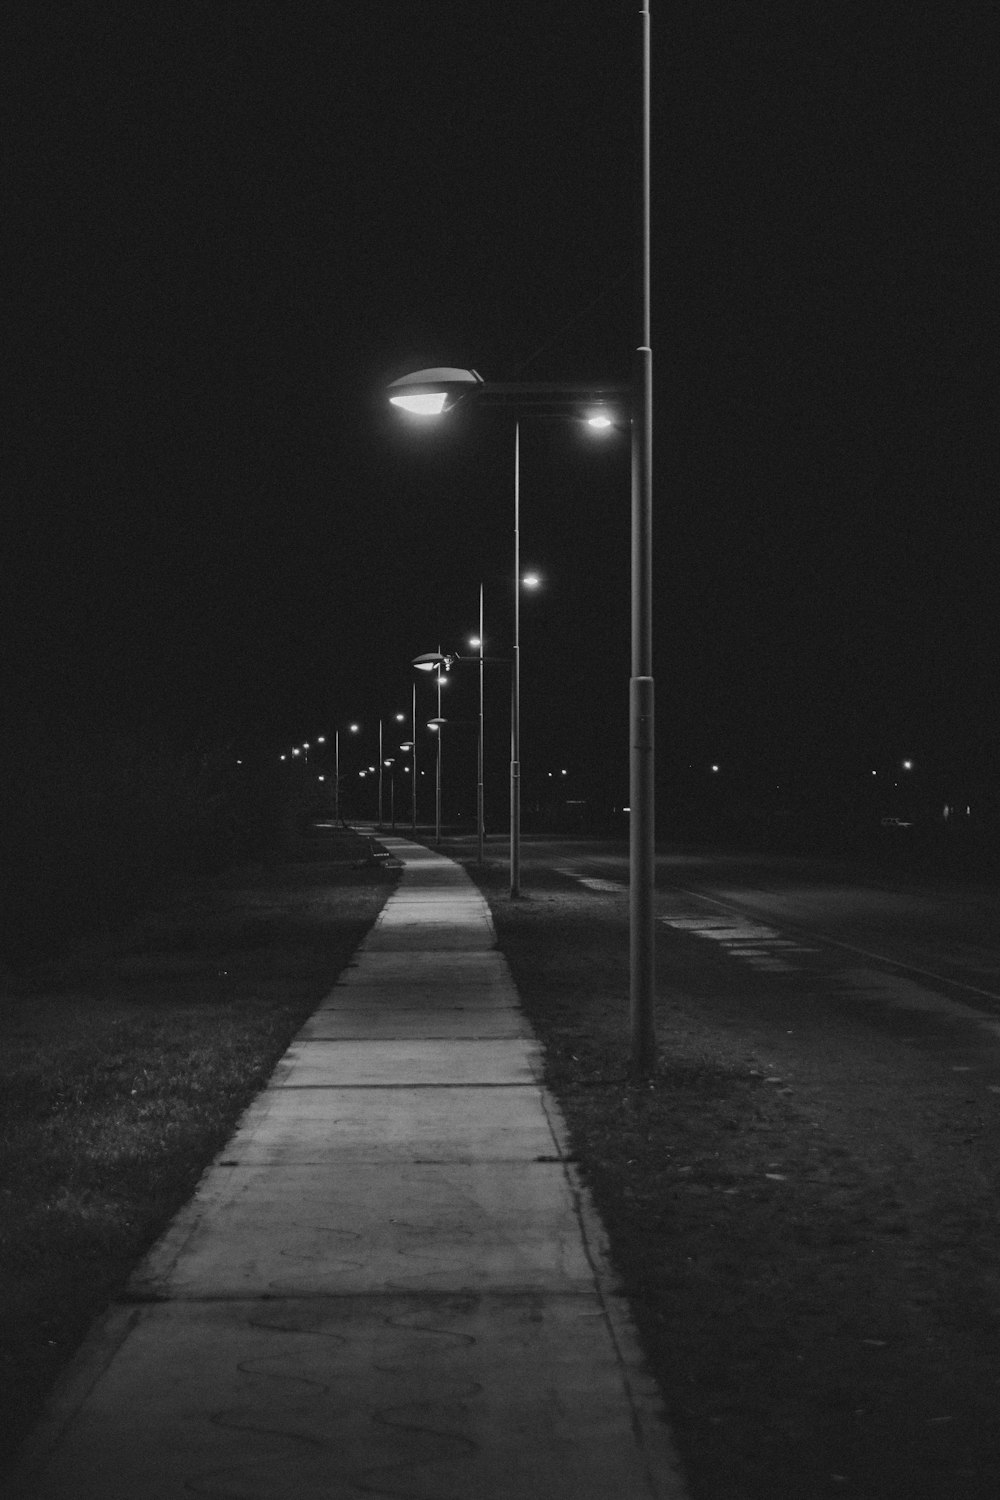 Street Light Turned On During Night Time Photo – Free Path Image On Unsplash